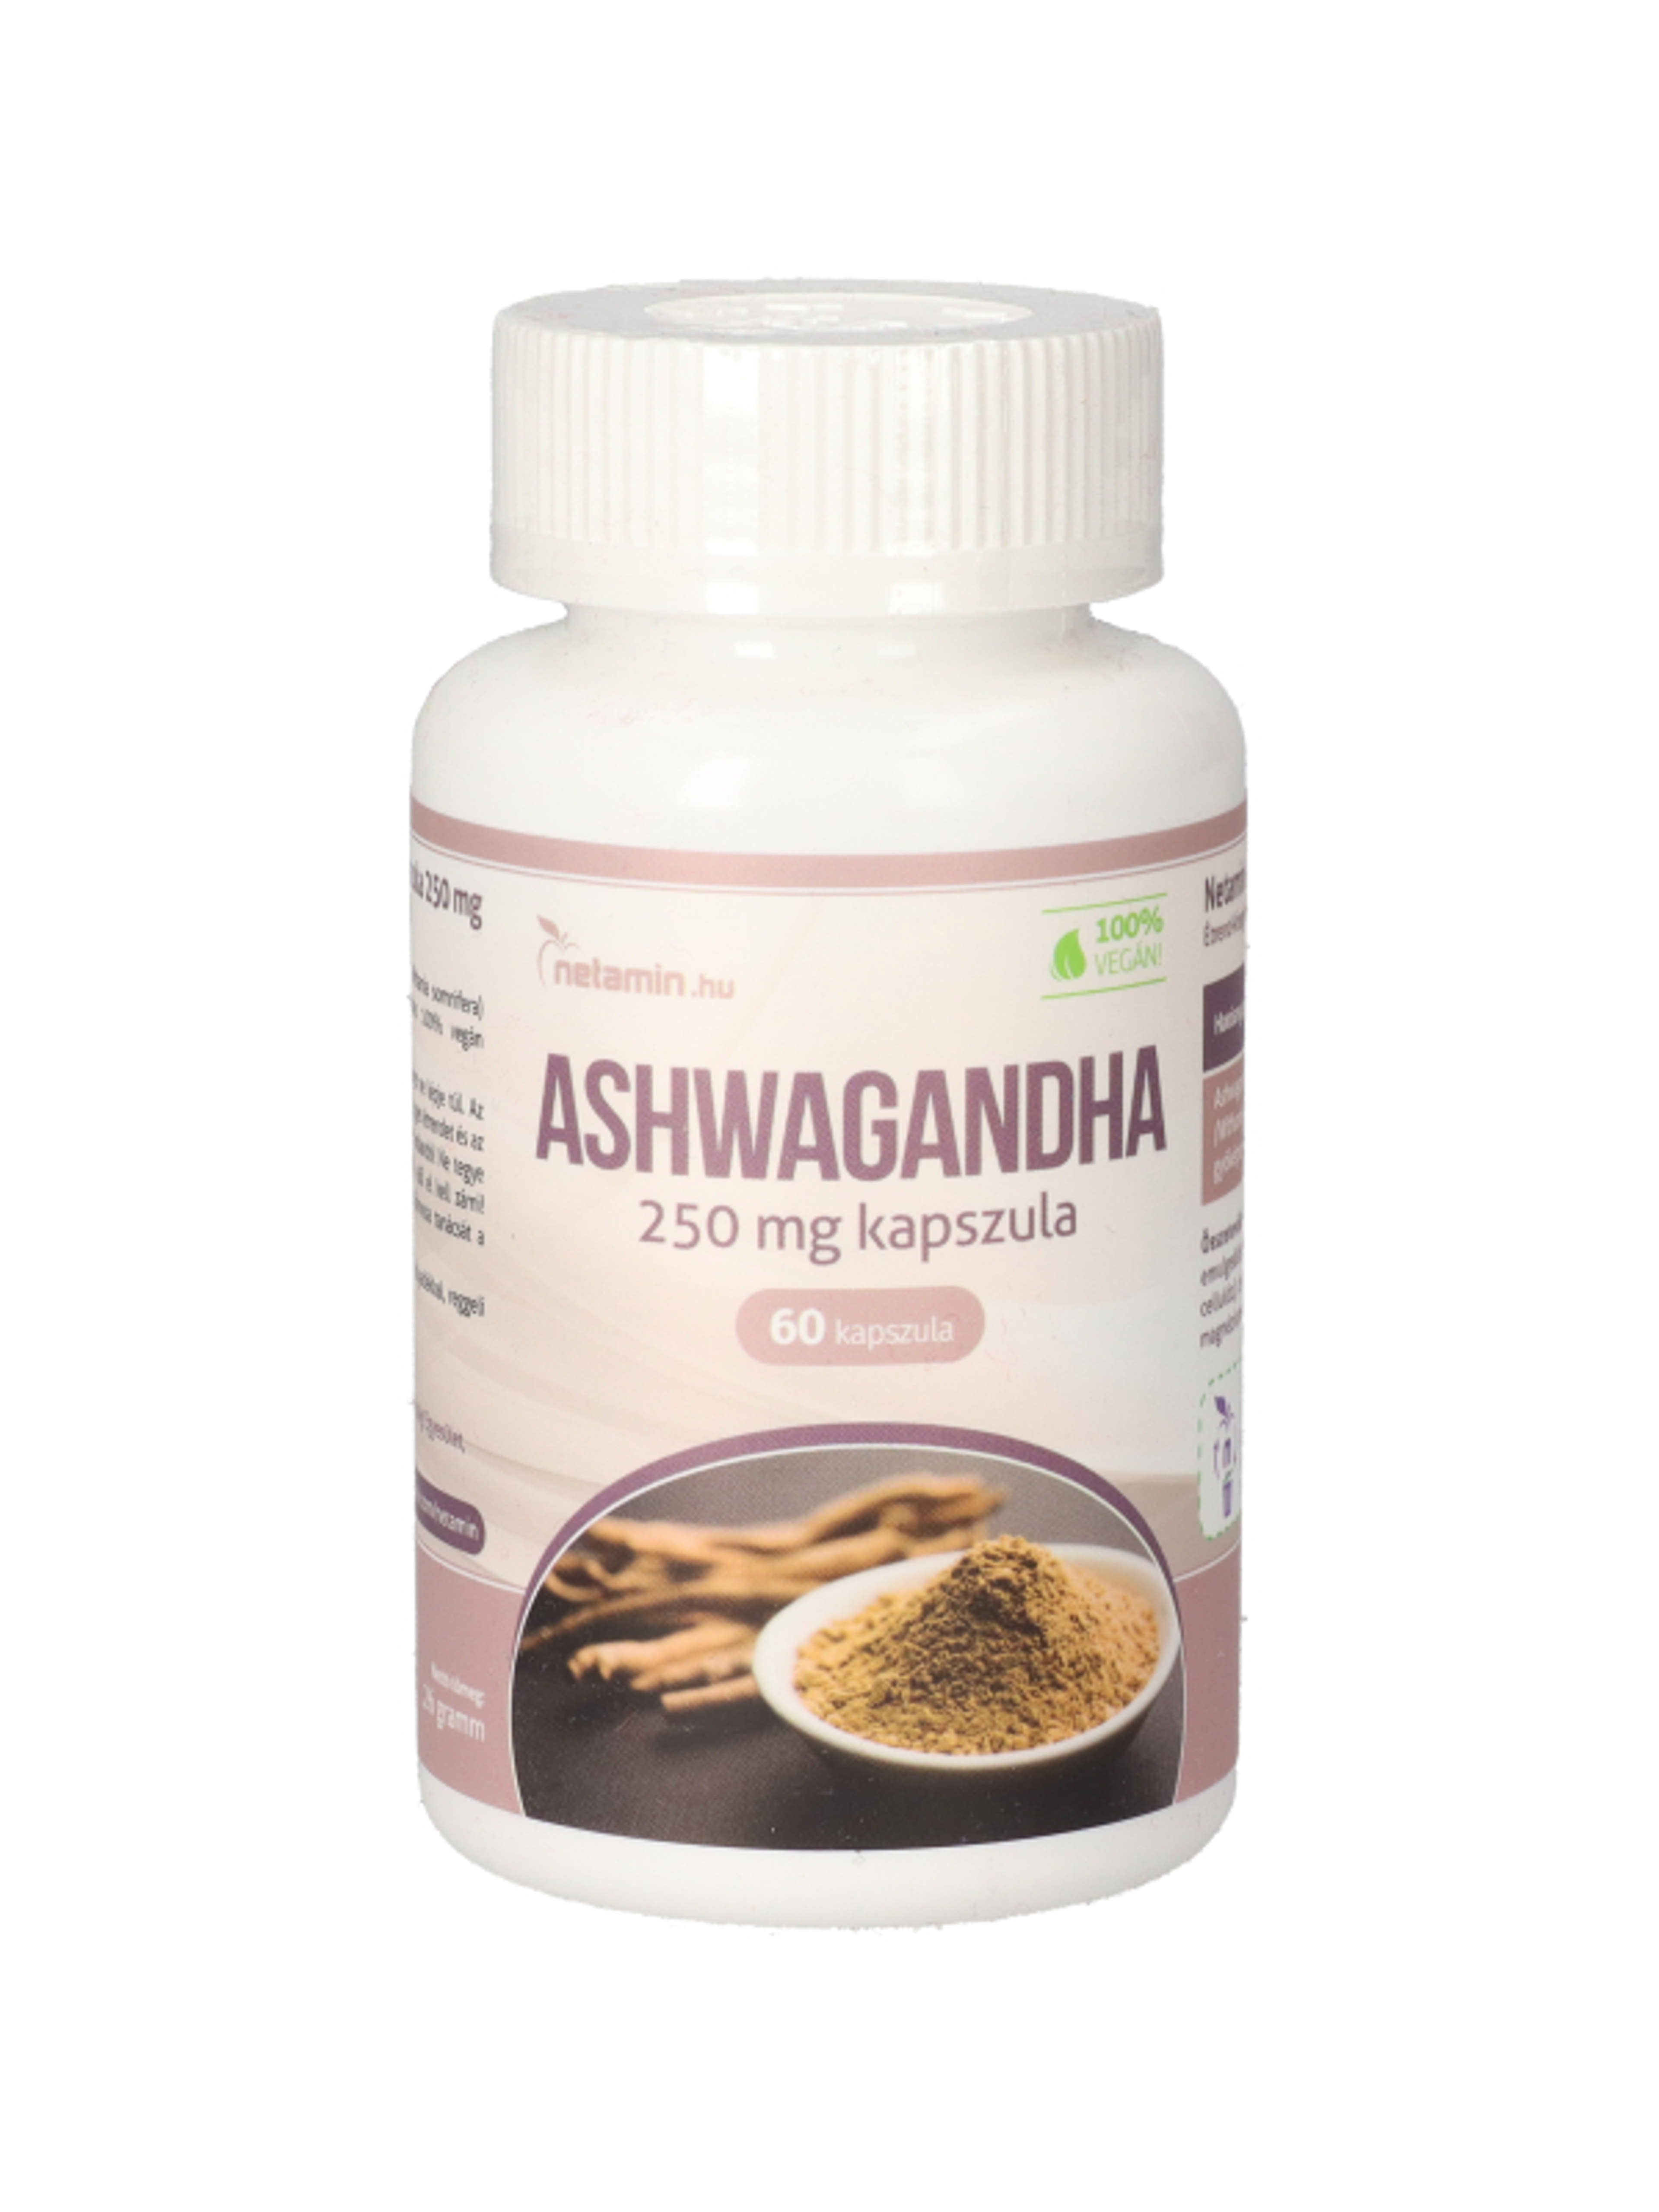 Netamin Ashwagandha kapszula, 250 mg - 60 db